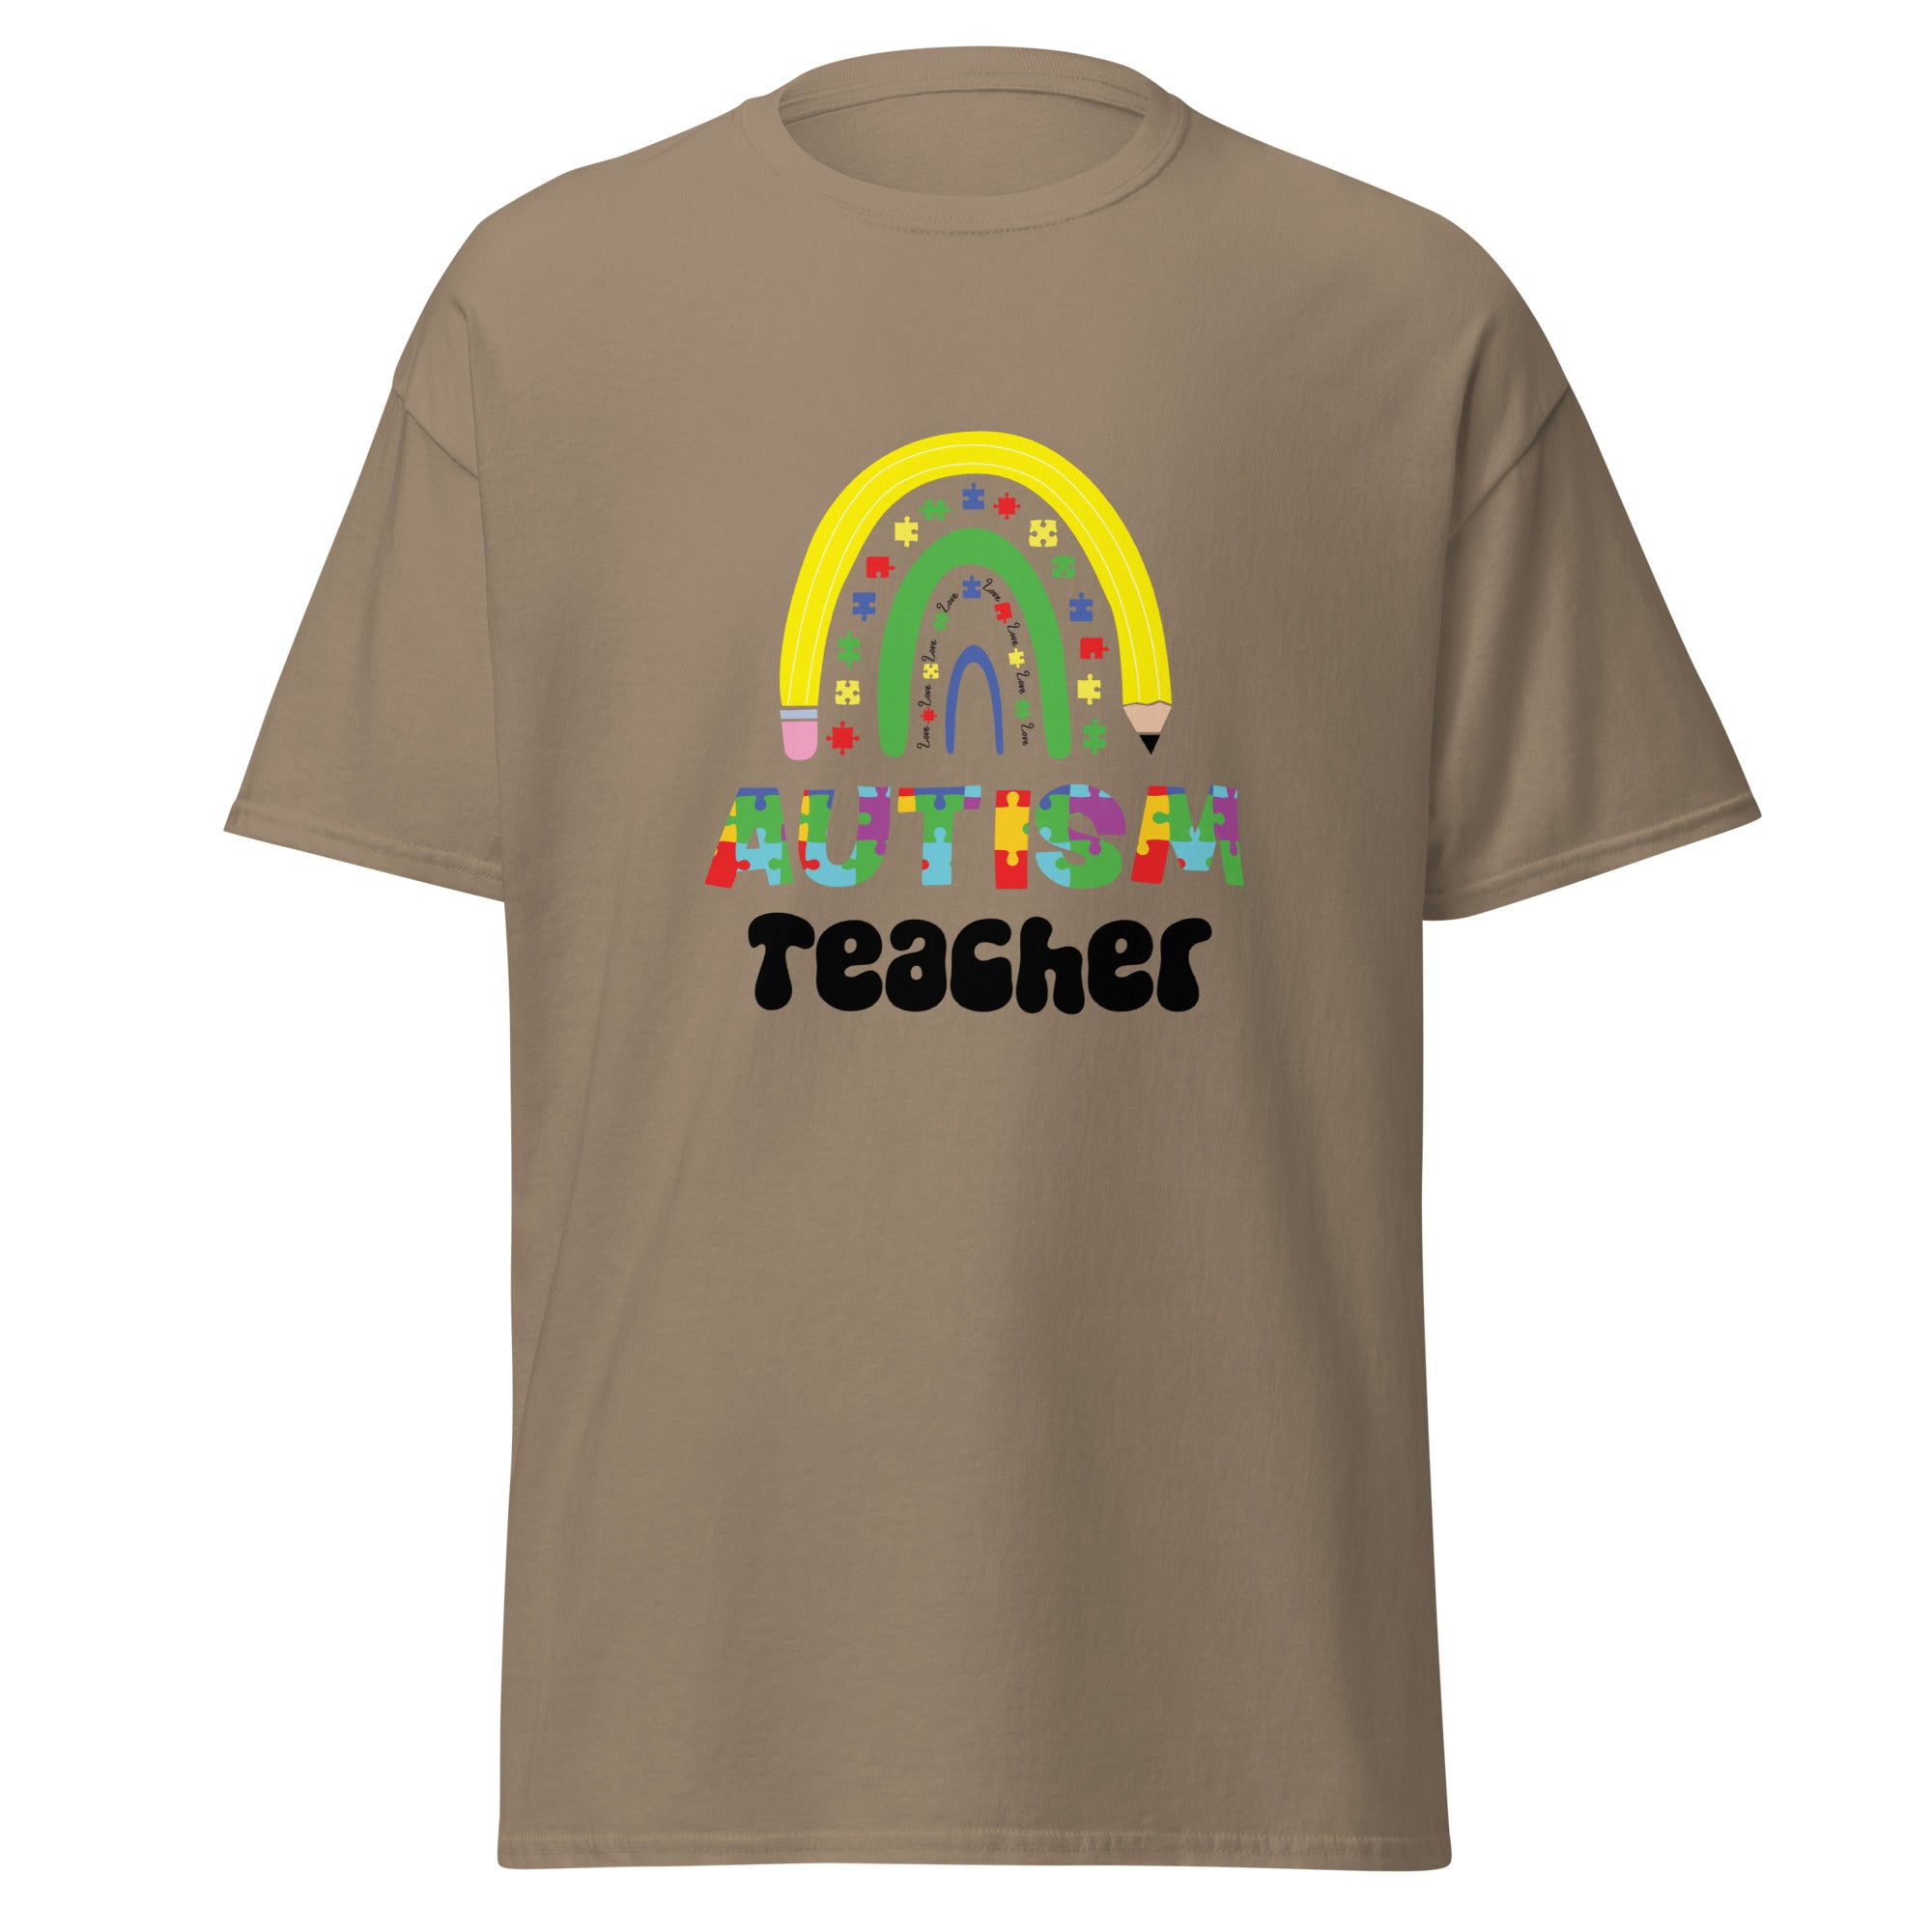 Autism Teacher Mens Custom T Shirt